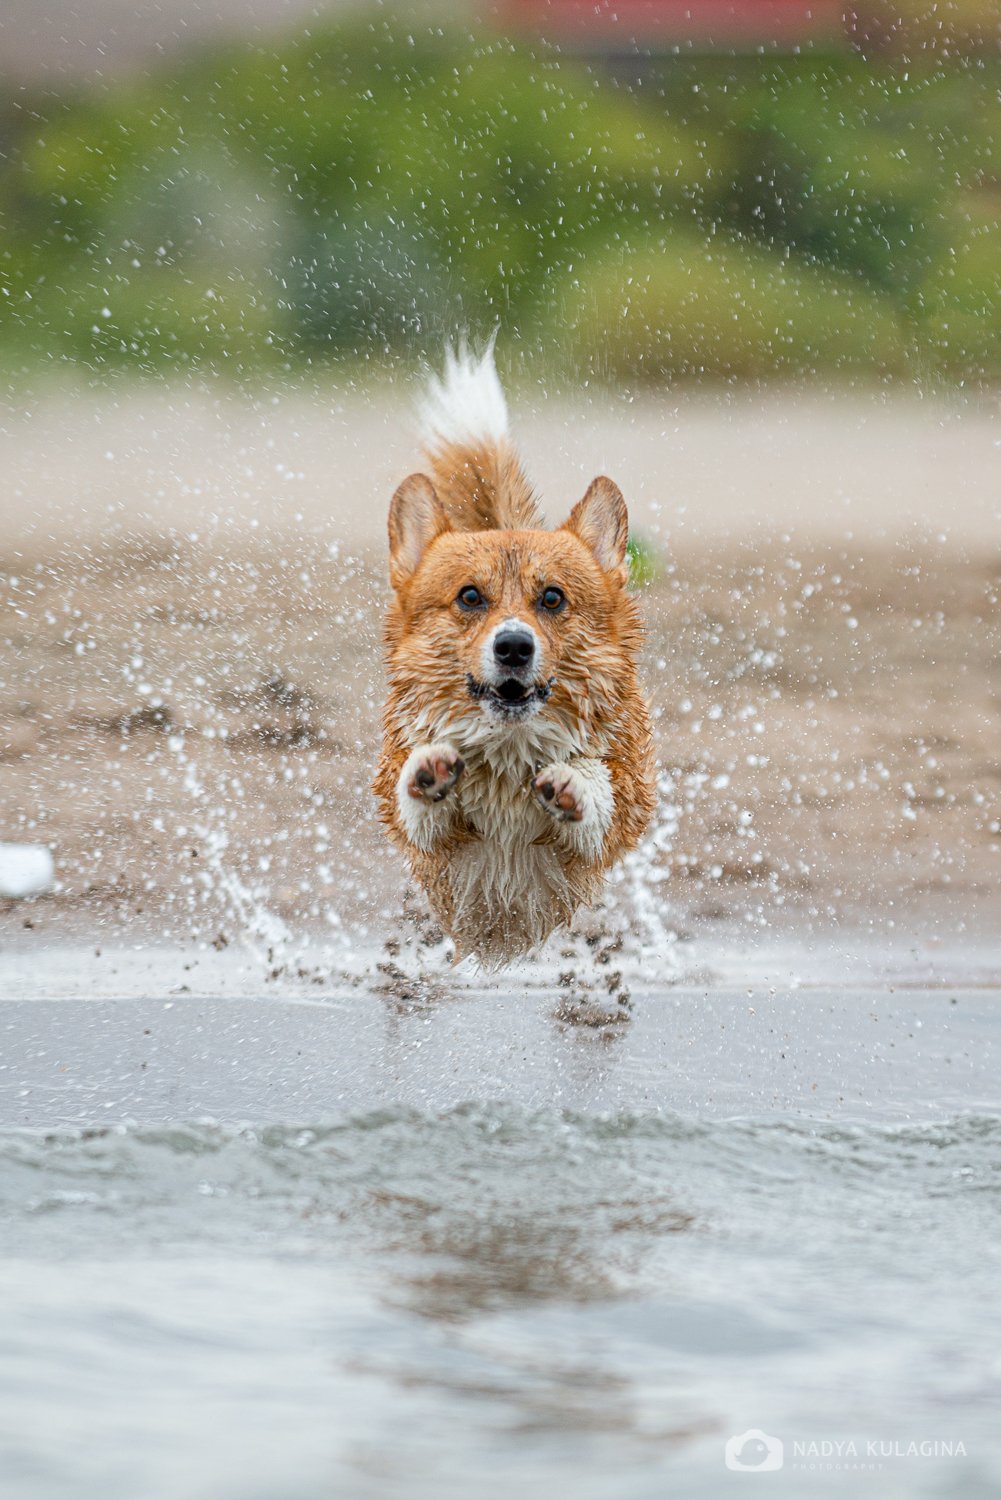 dog, pet, animal, mammal, pembroke, fly, jump, soar, water, bathe, fun, run, action, action photography, Nadya Kulagina